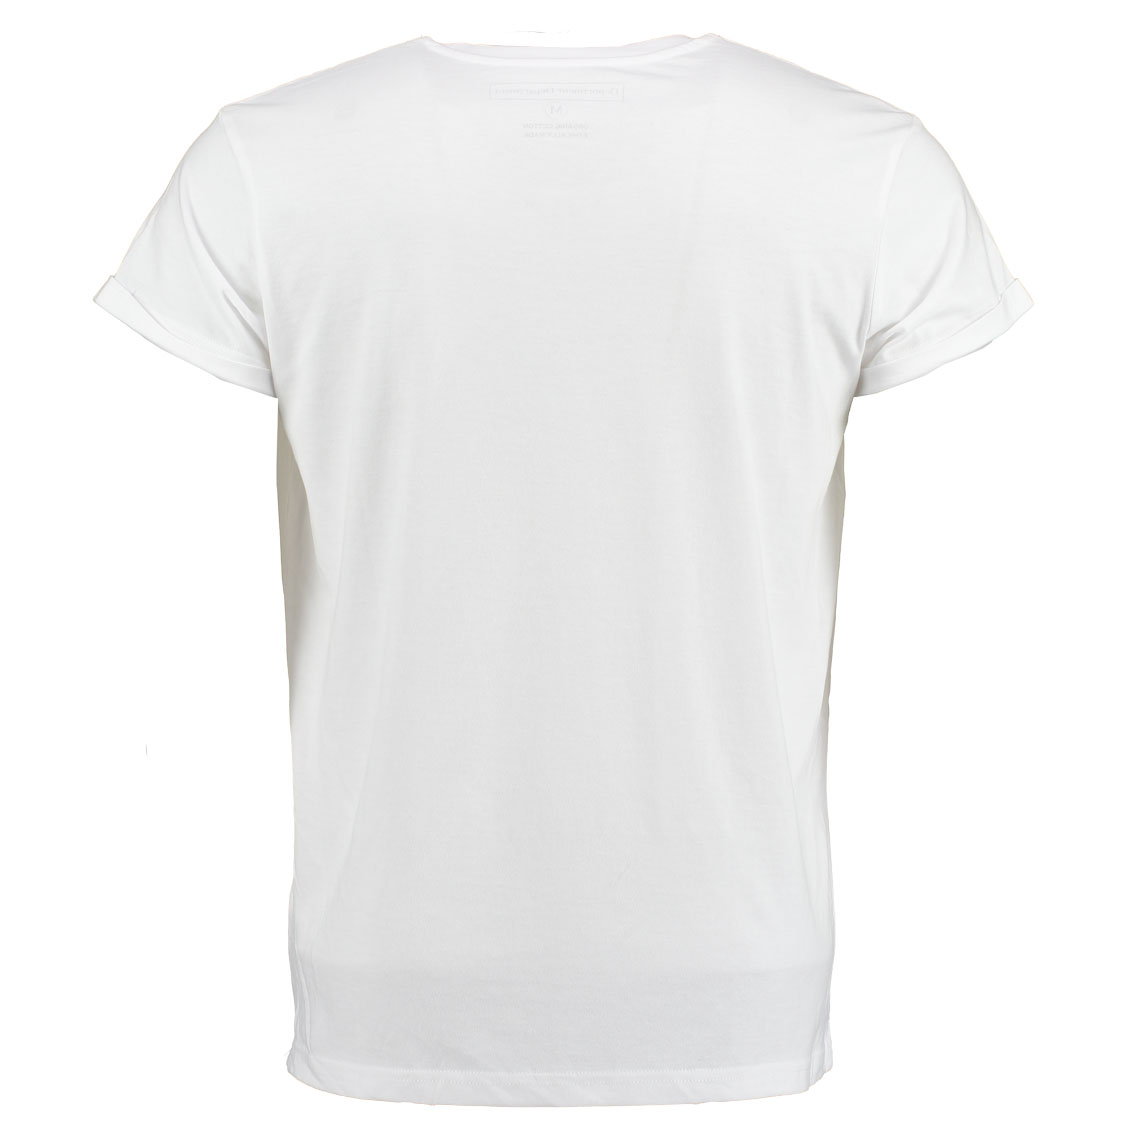 Deportment Department T shirt mens white back